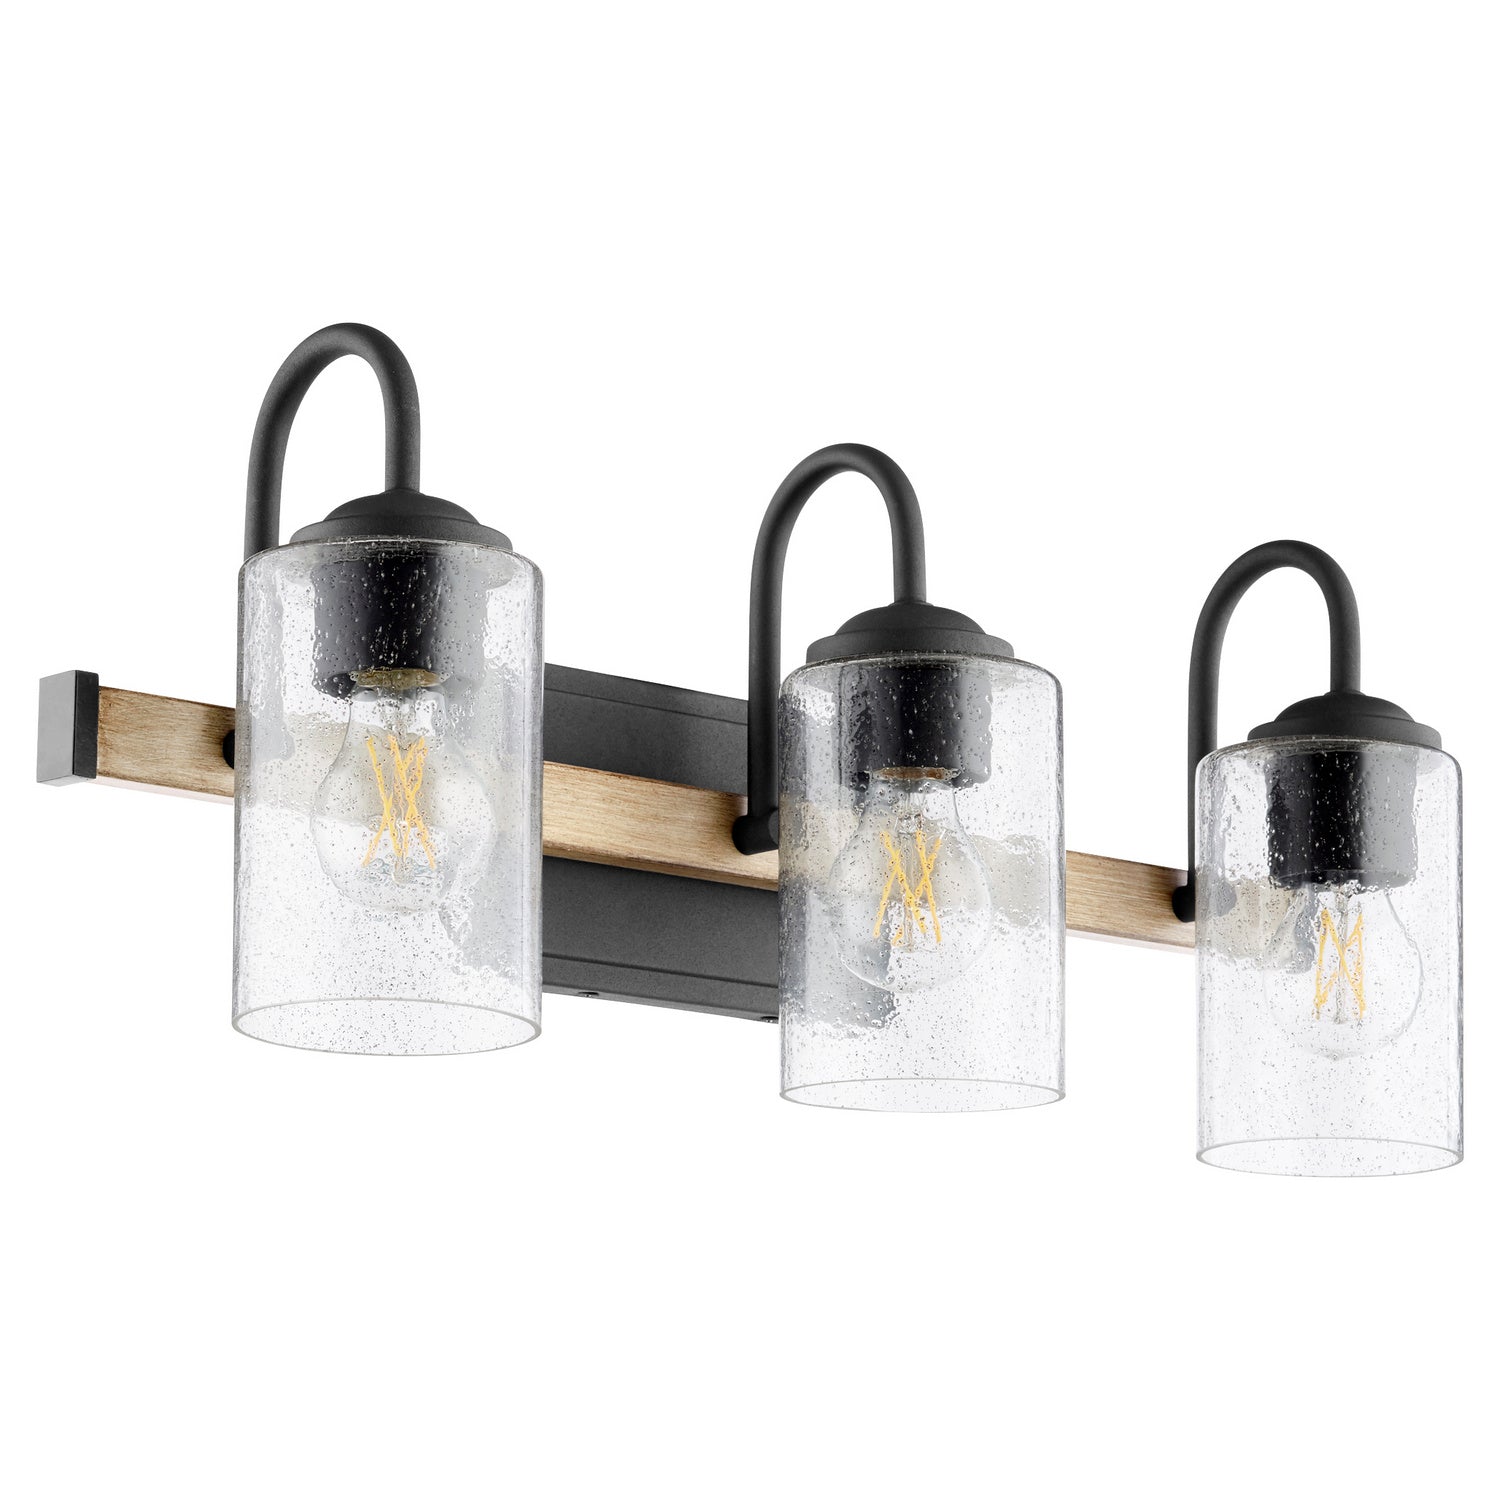 Quorum - 5140-3-69 - Three Light Vanity - 5140 Pepper Glass Lighting Series - Textured Black w/ Driftwood finish